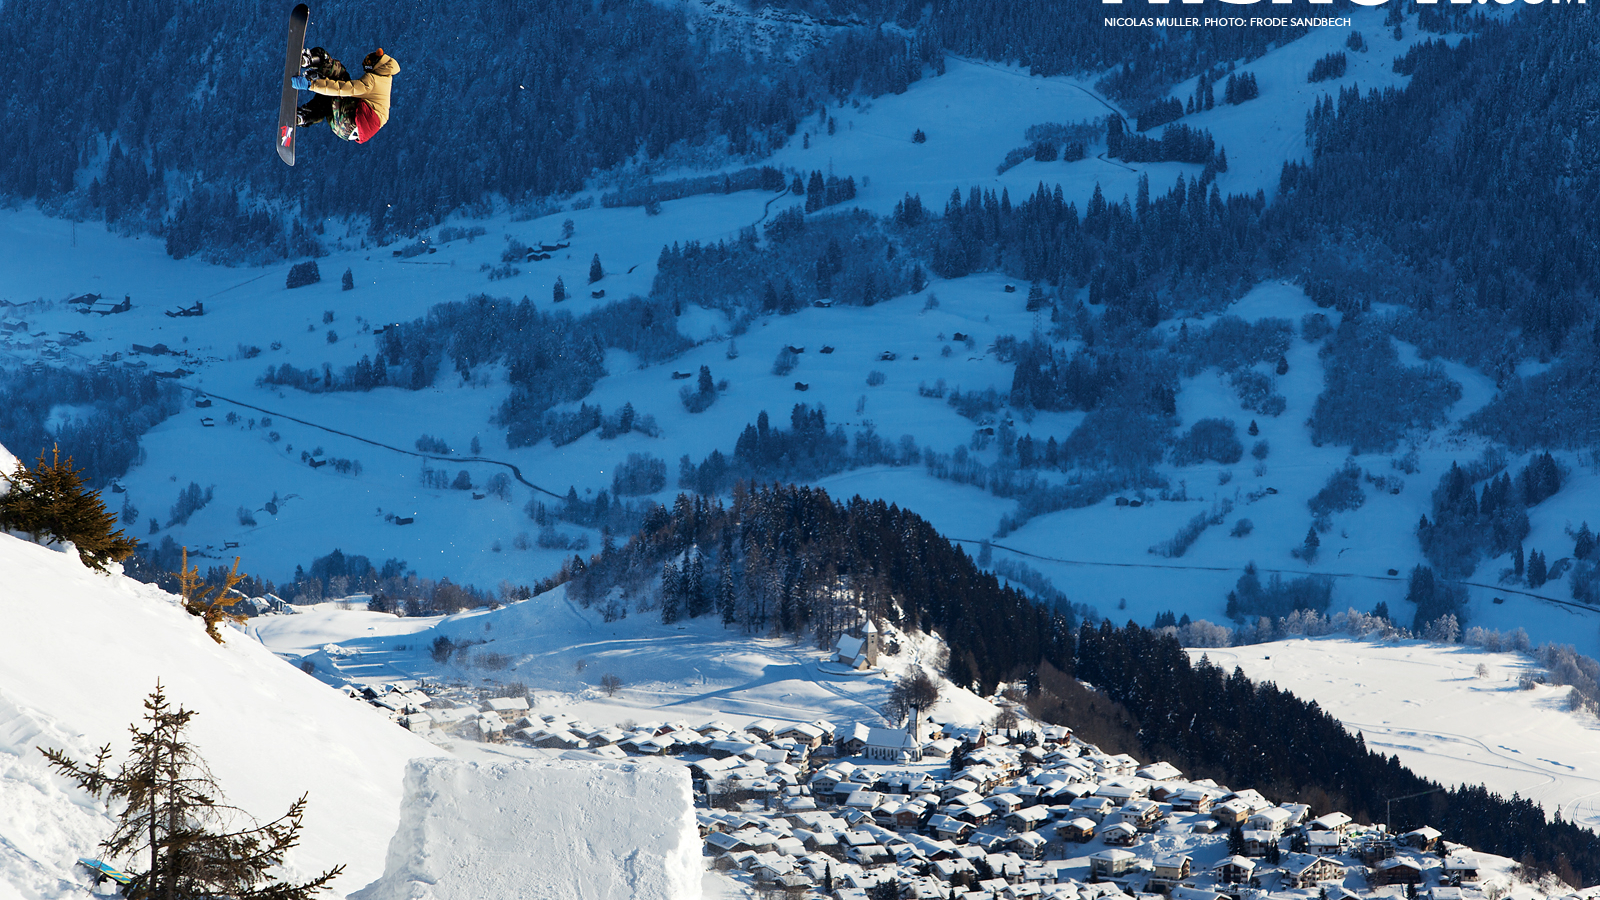 Transworld Snowboarding Wallpapers